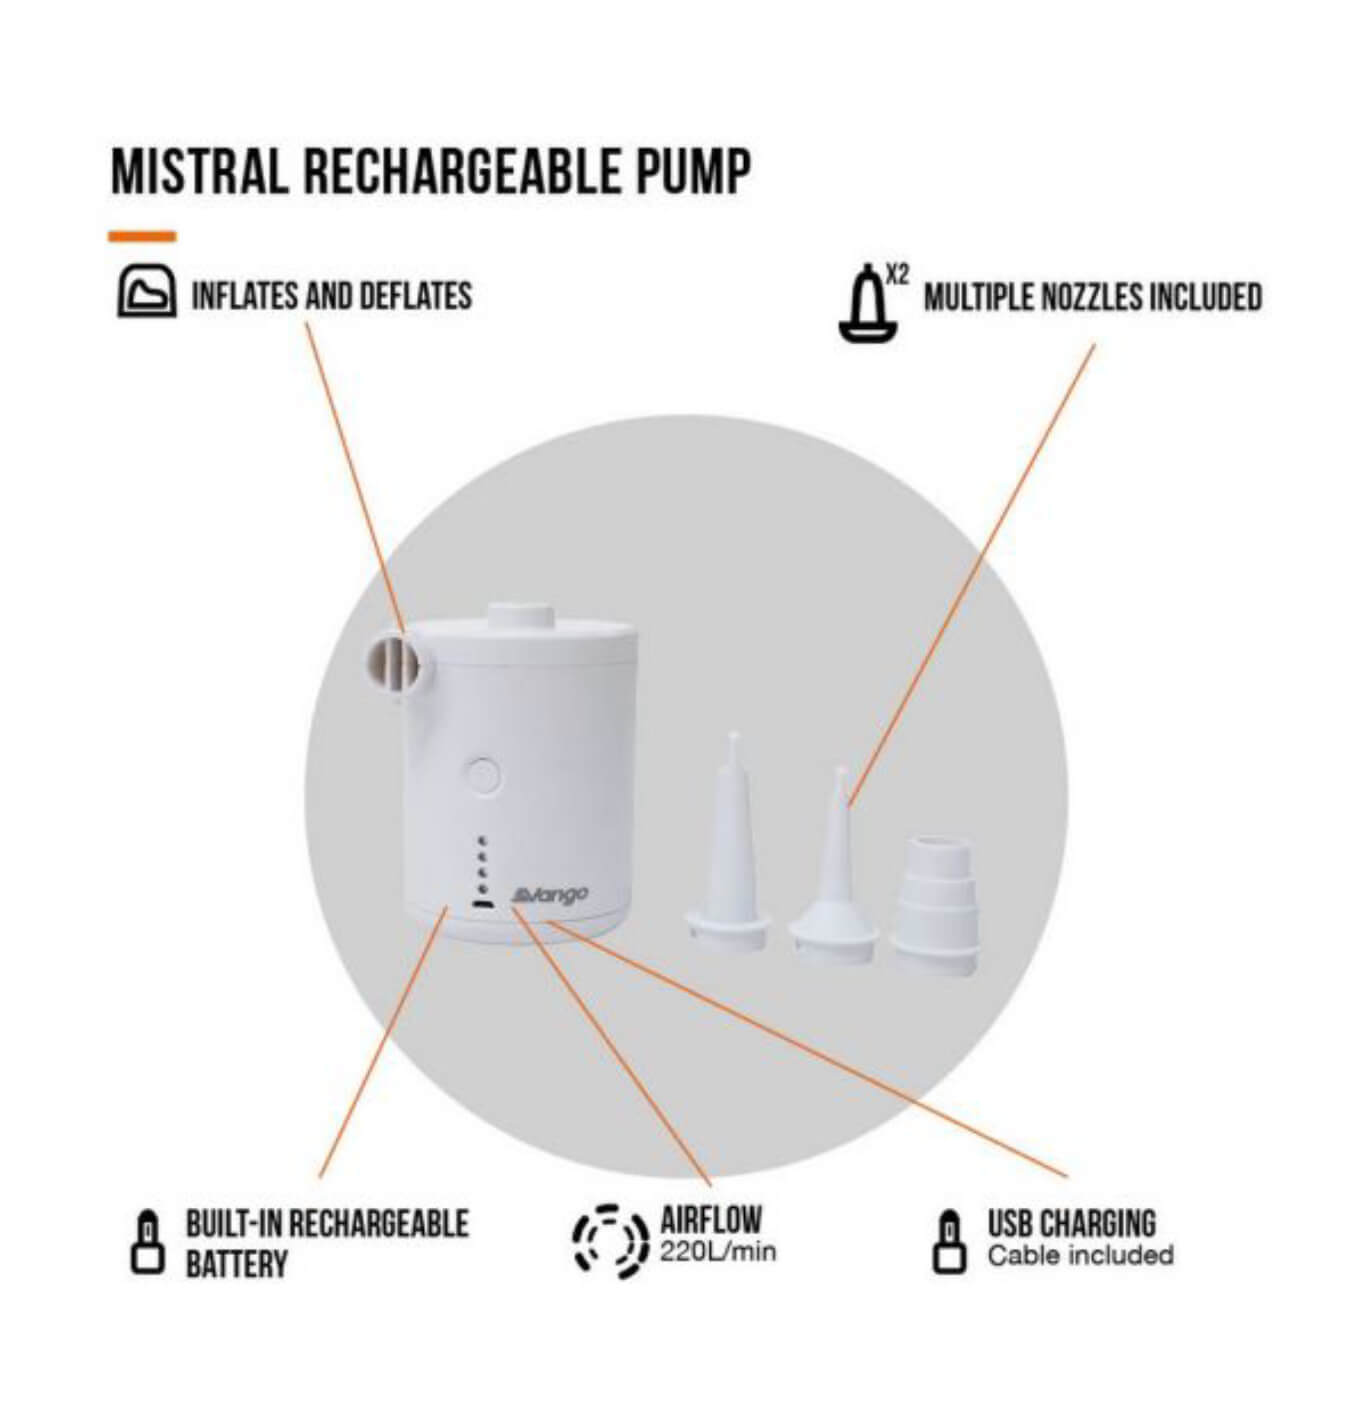 Vango Mistral Rechargeable Pump Image